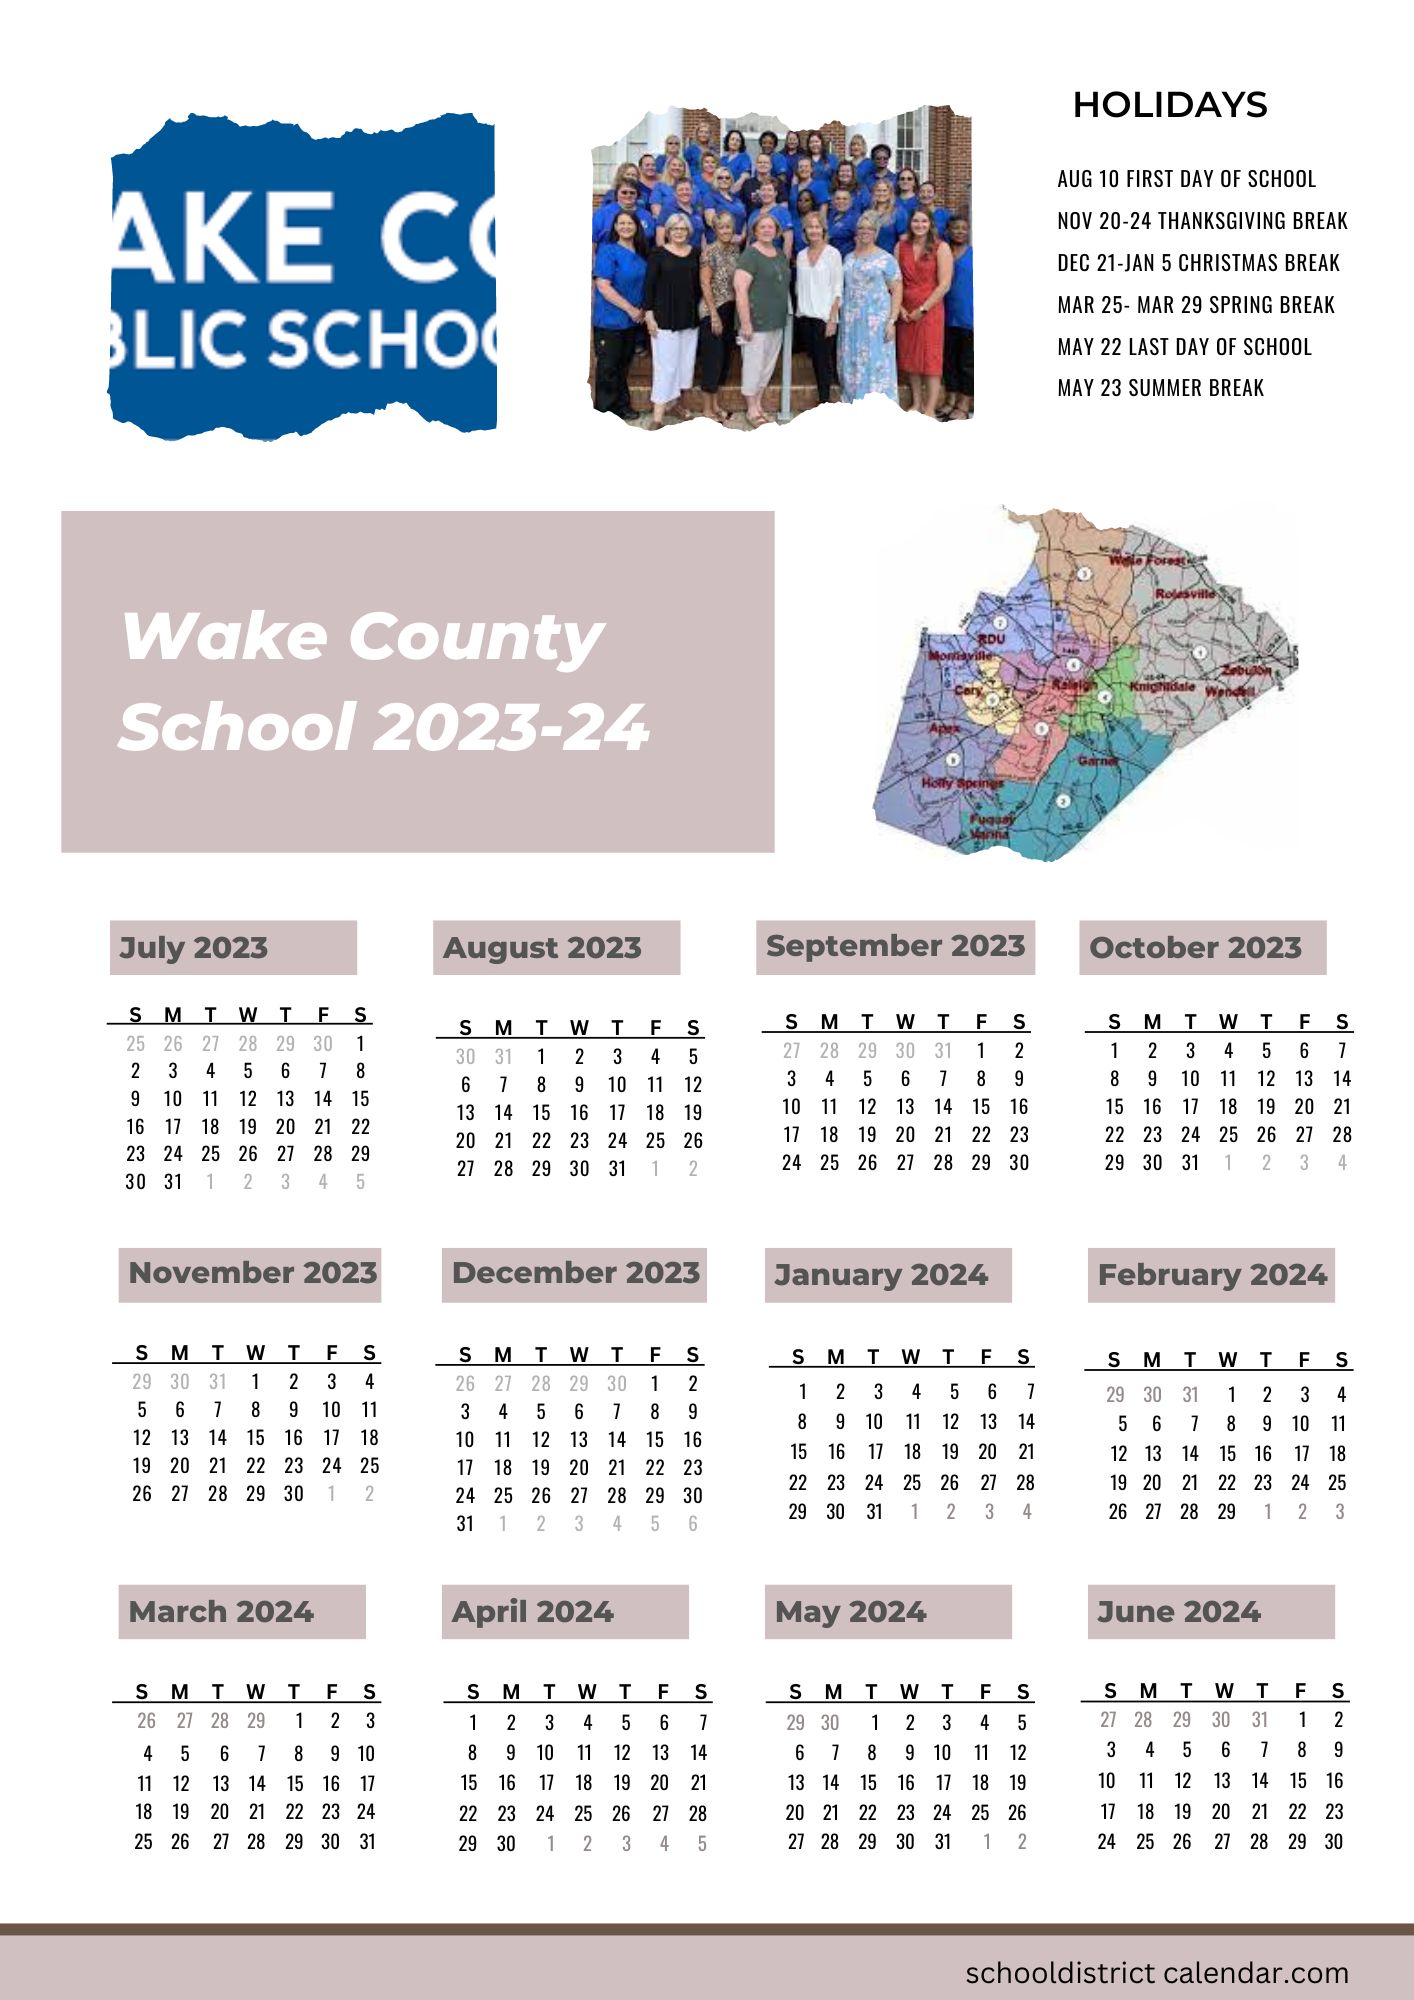 Wake County Schools Calendar Holidays 20232024